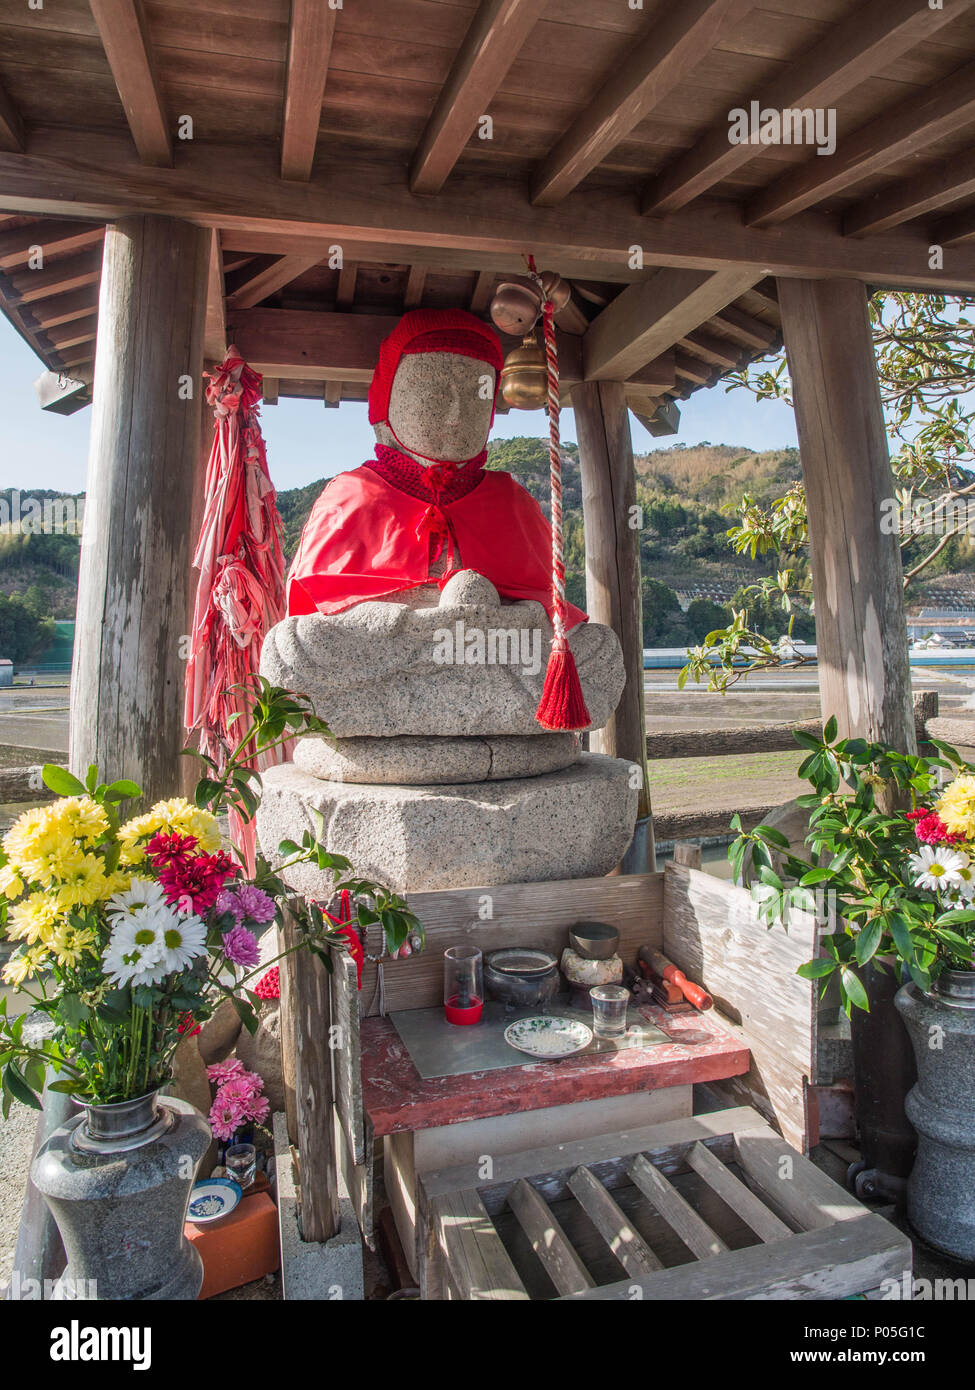 Strada santuario, henro no Michi pellegrino trail, Jizo Bosatsu statua in vesti rosse, con offerte, Kochi, Shikoku Giappone Foto Stock